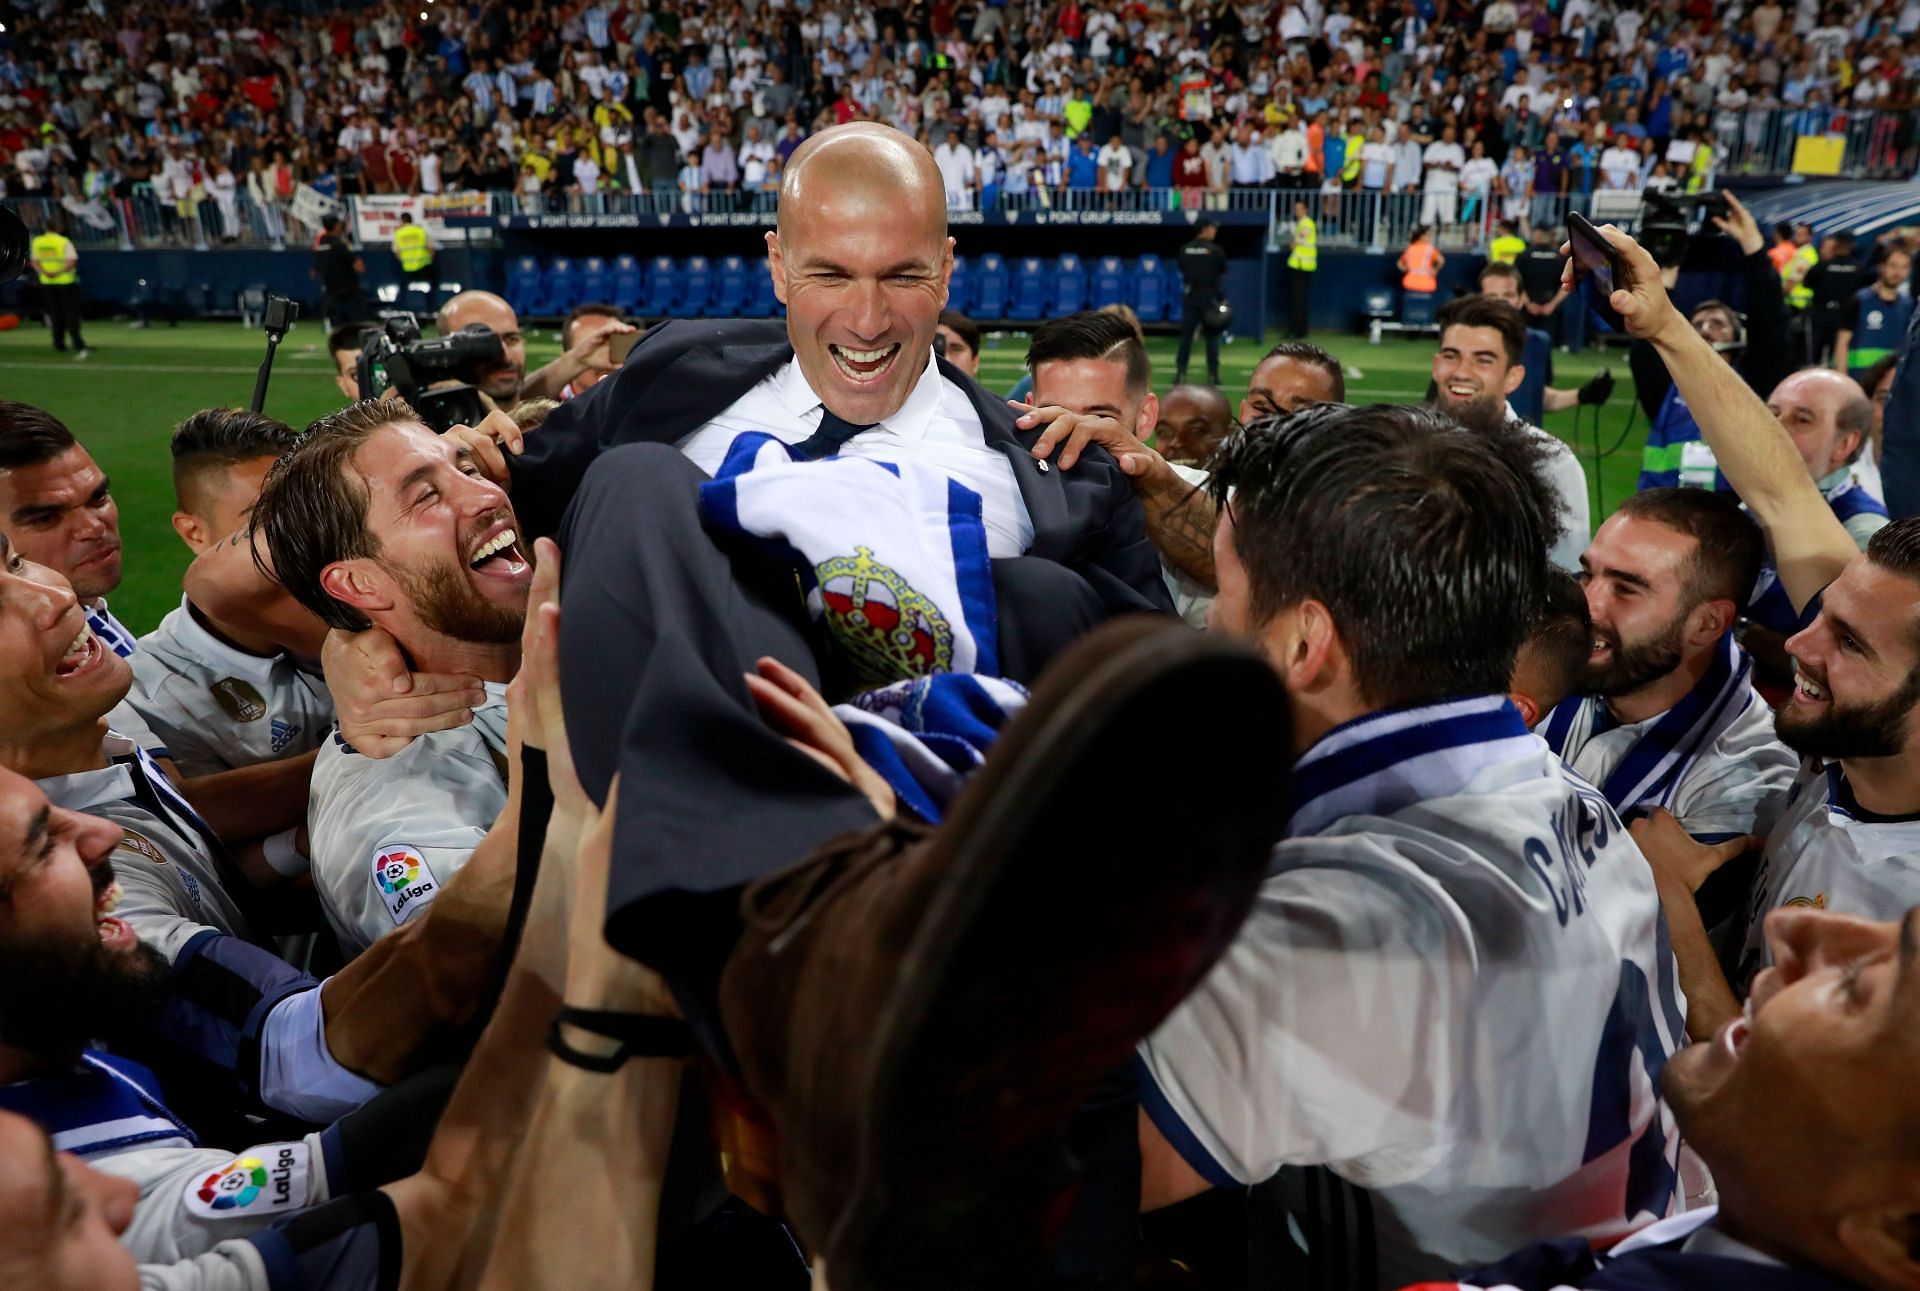 Zidane had huge success at Madrid